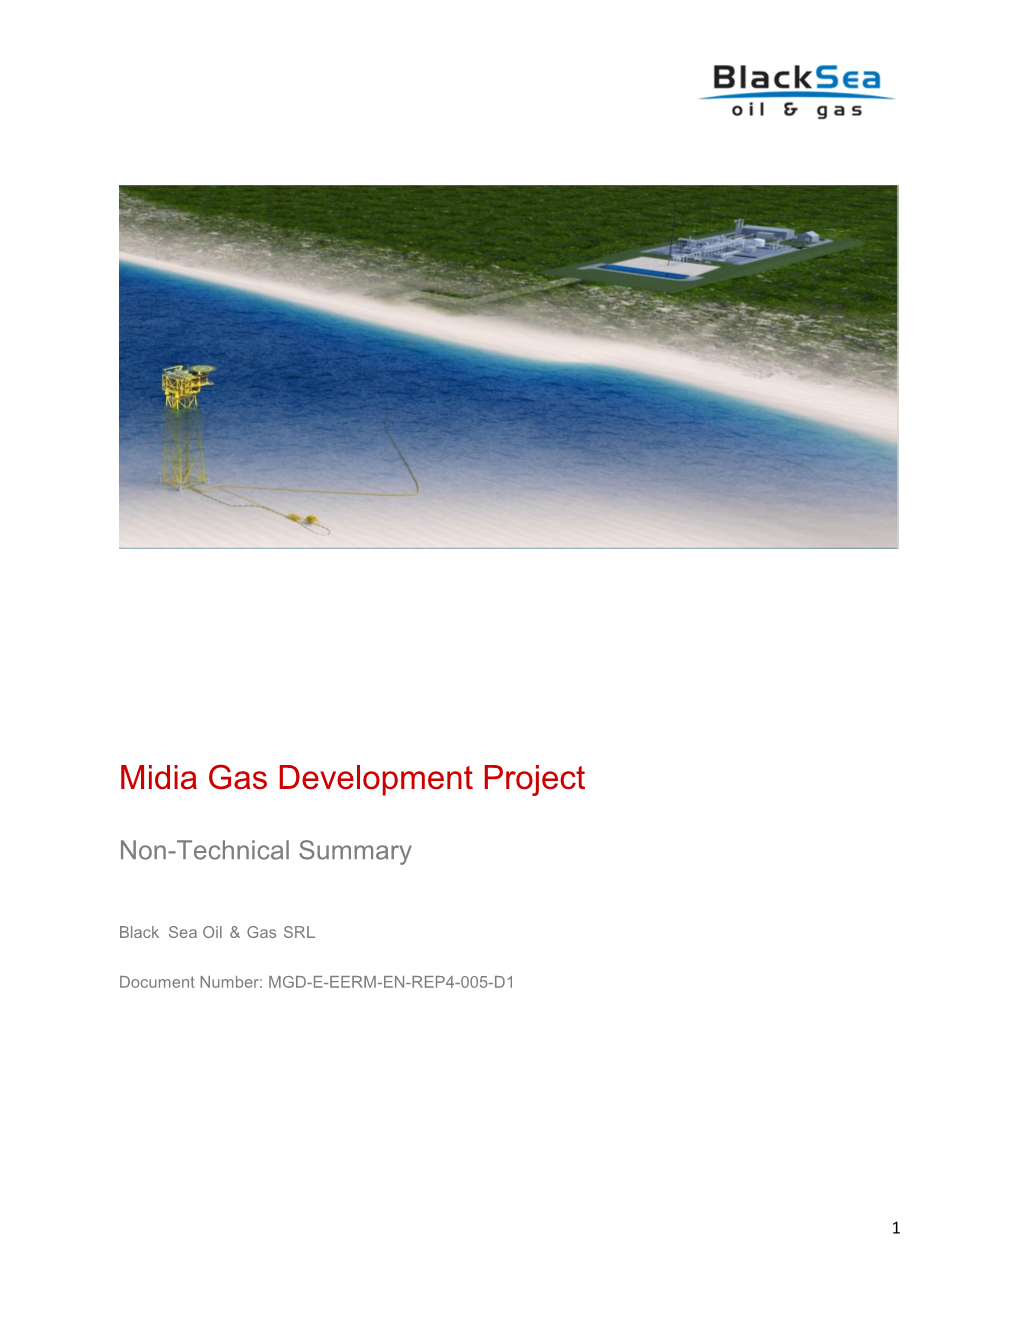 Midia Gas Development Project